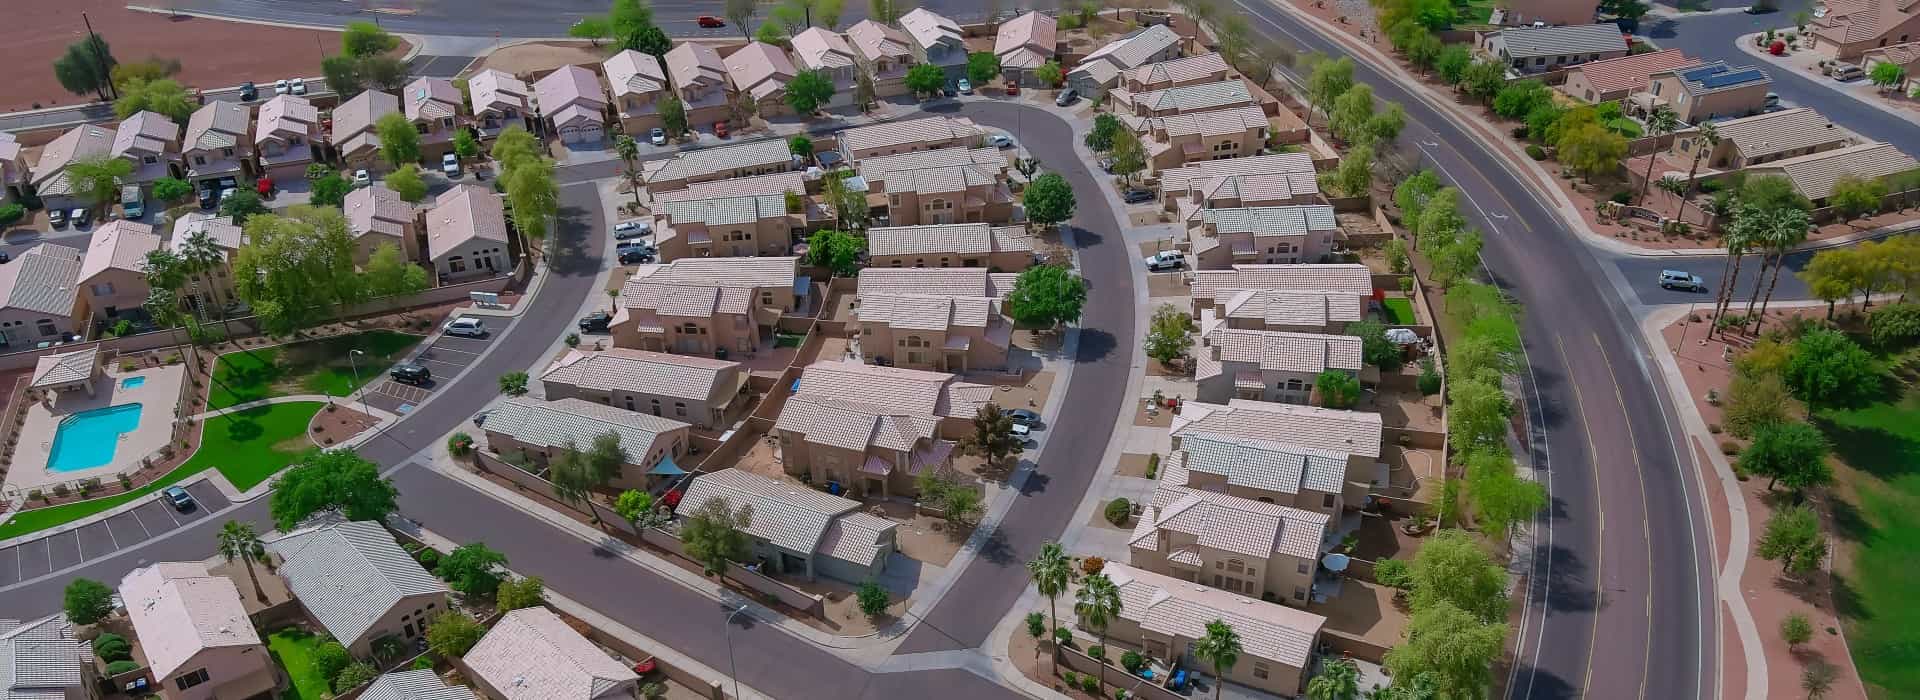 View of neighborhood in AZ